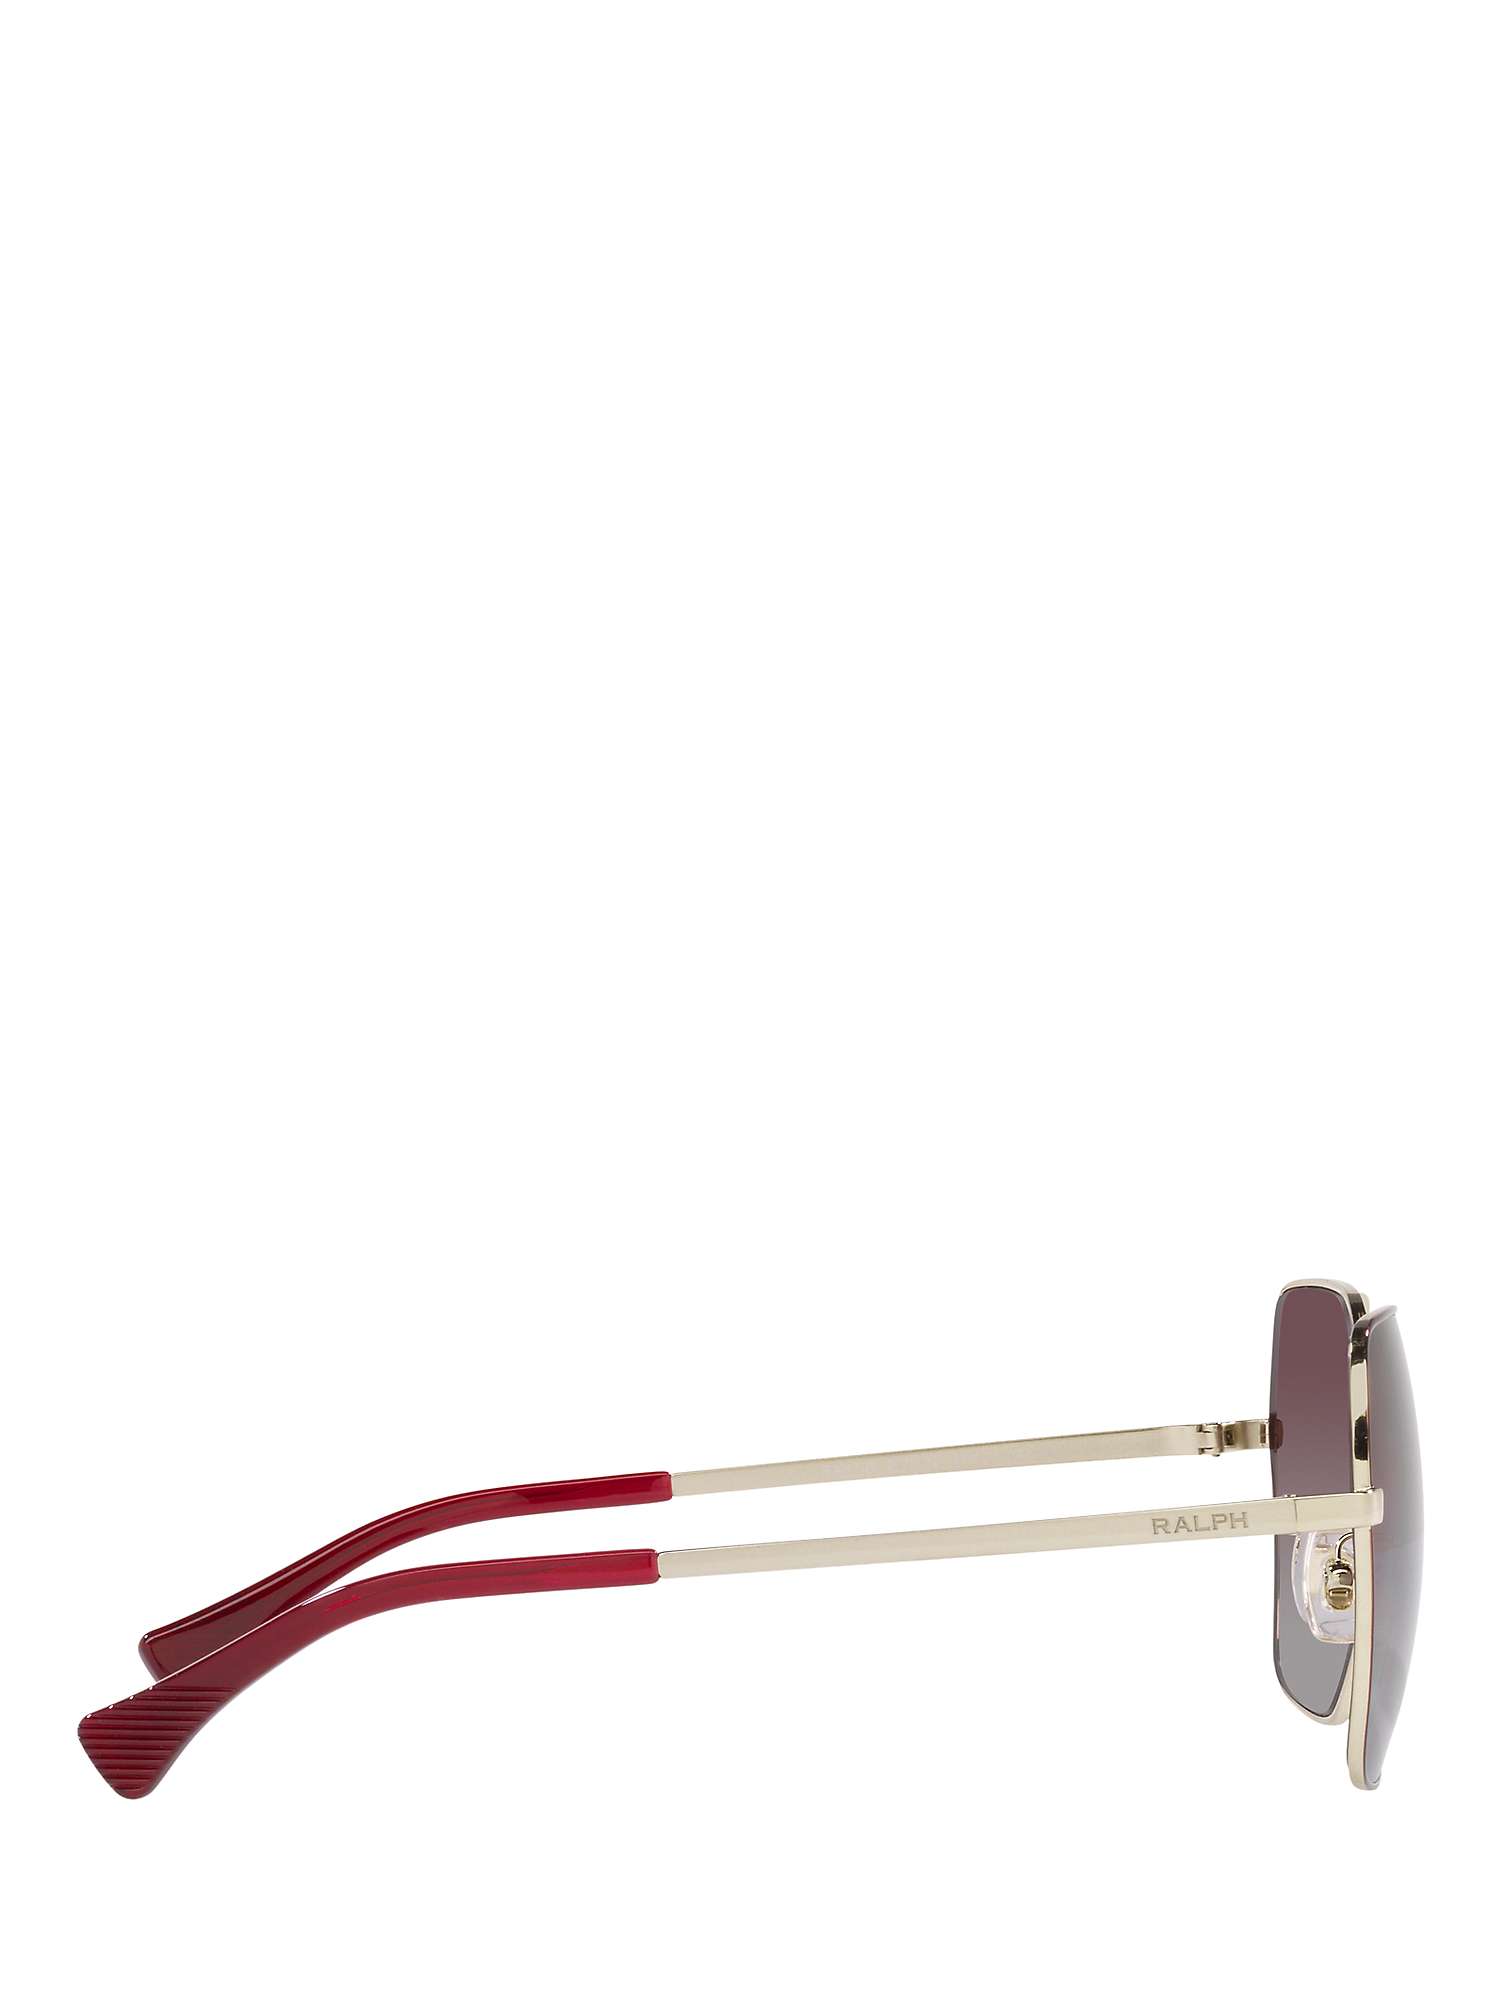 Buy Ralph RA4138 Women's Polarised Square Sunglasses, Bordeaux/Violet Gradient Online at johnlewis.com